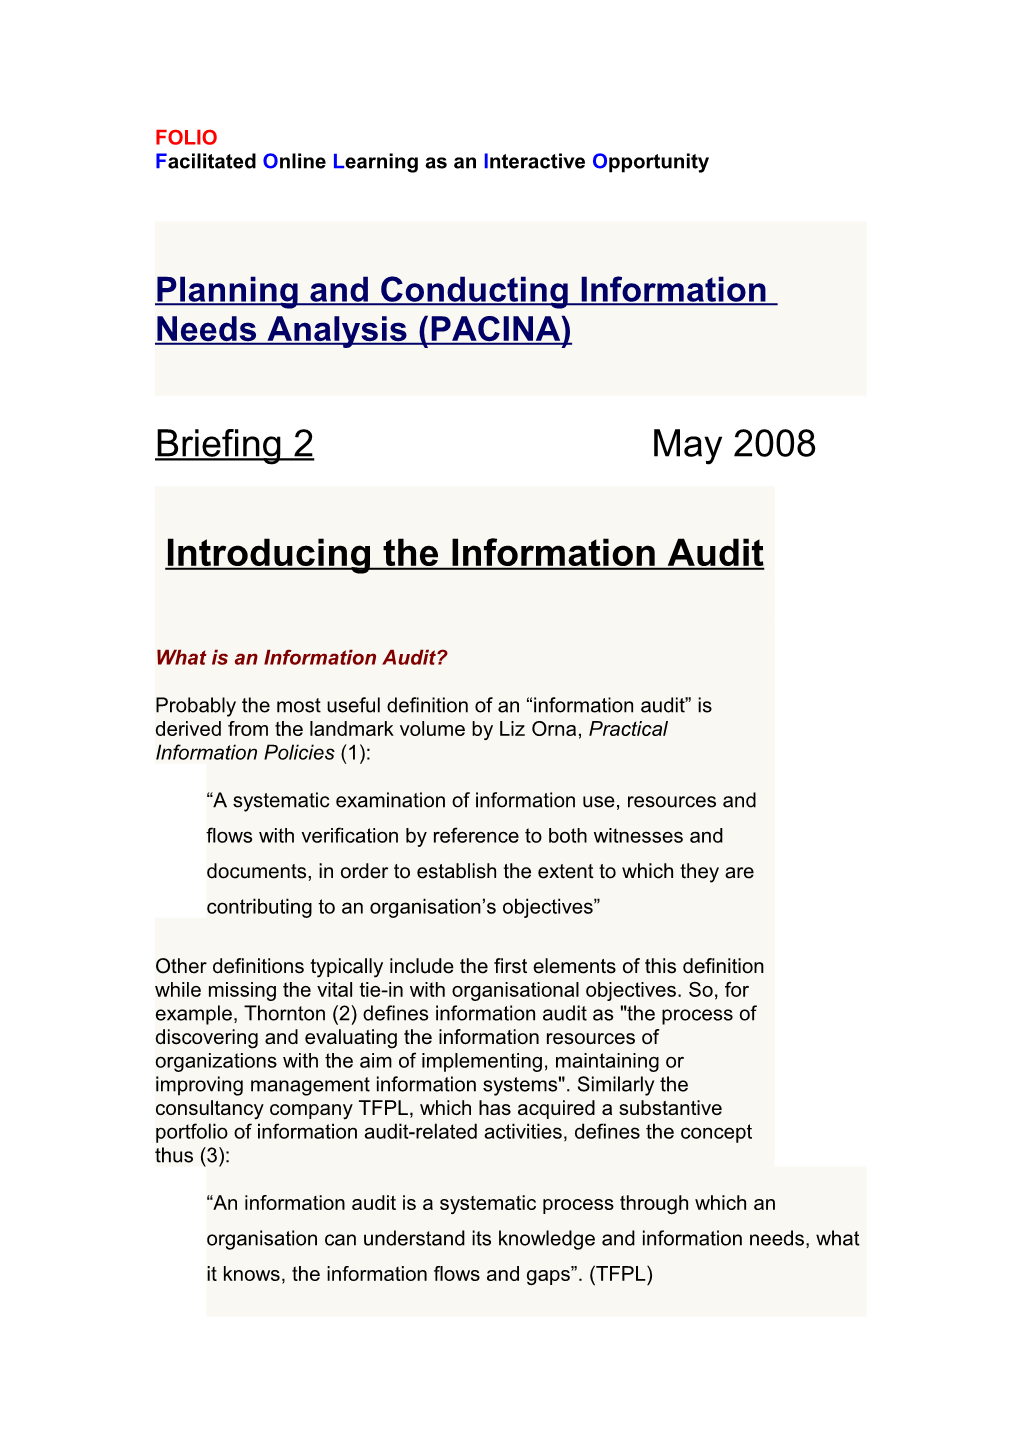 Planning and Conducting Information Needs Analysis (PACINA)